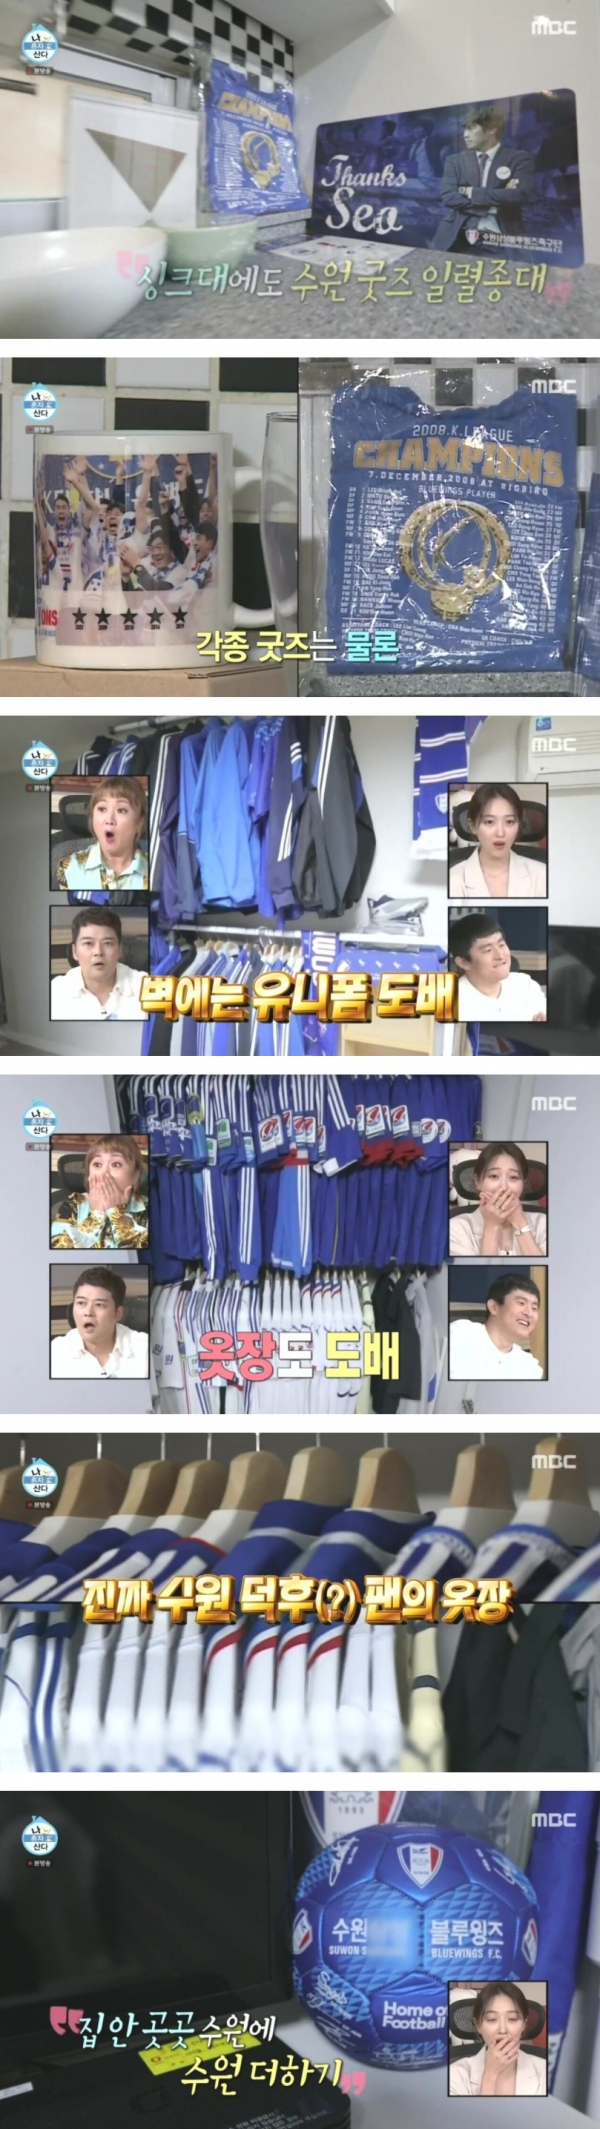 MBC '나혼자산다' 방송화면